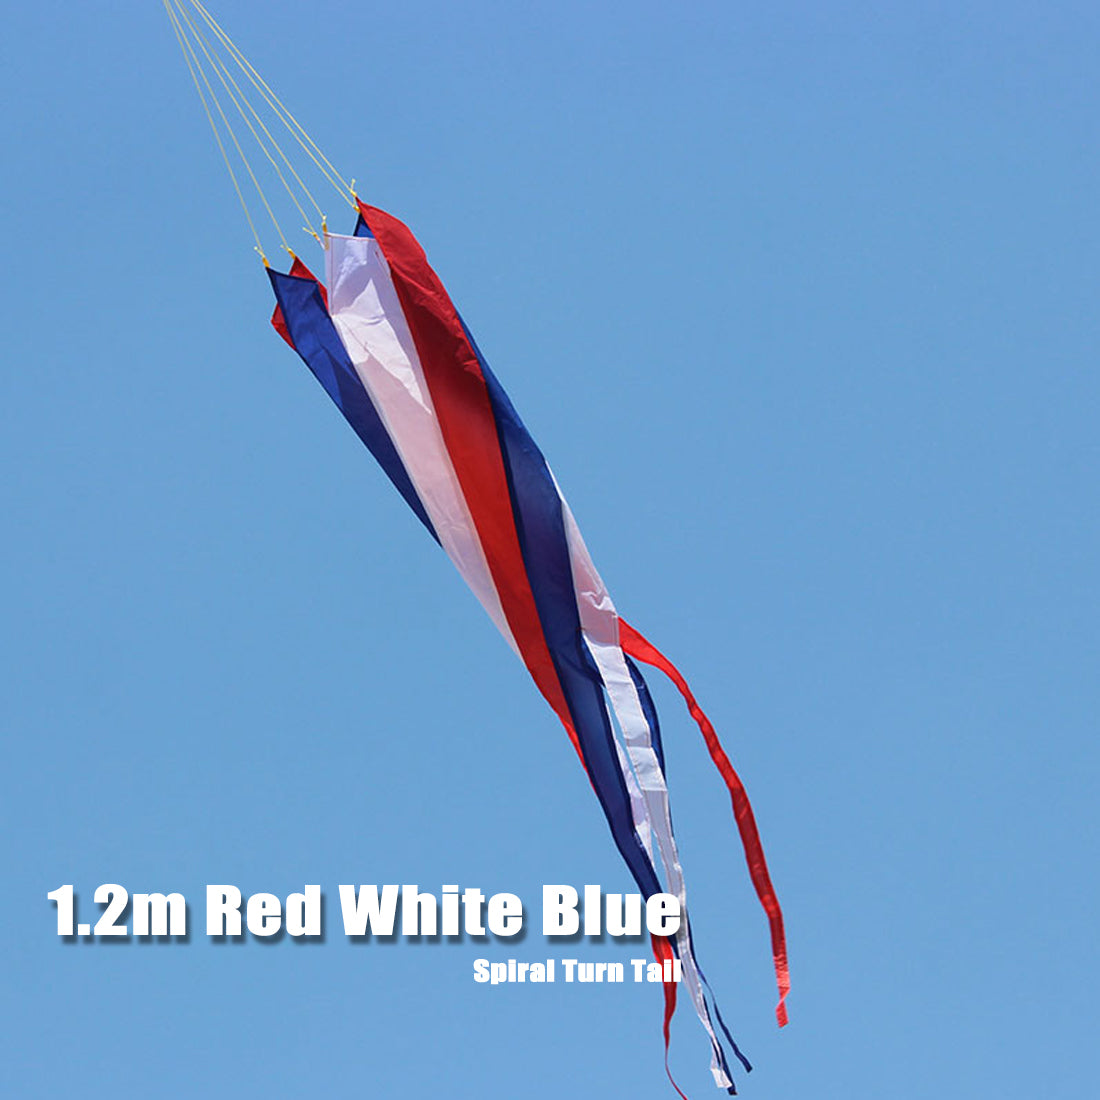 1.2m Outdoor WindSocks kite tail Rip-Stop Fabric